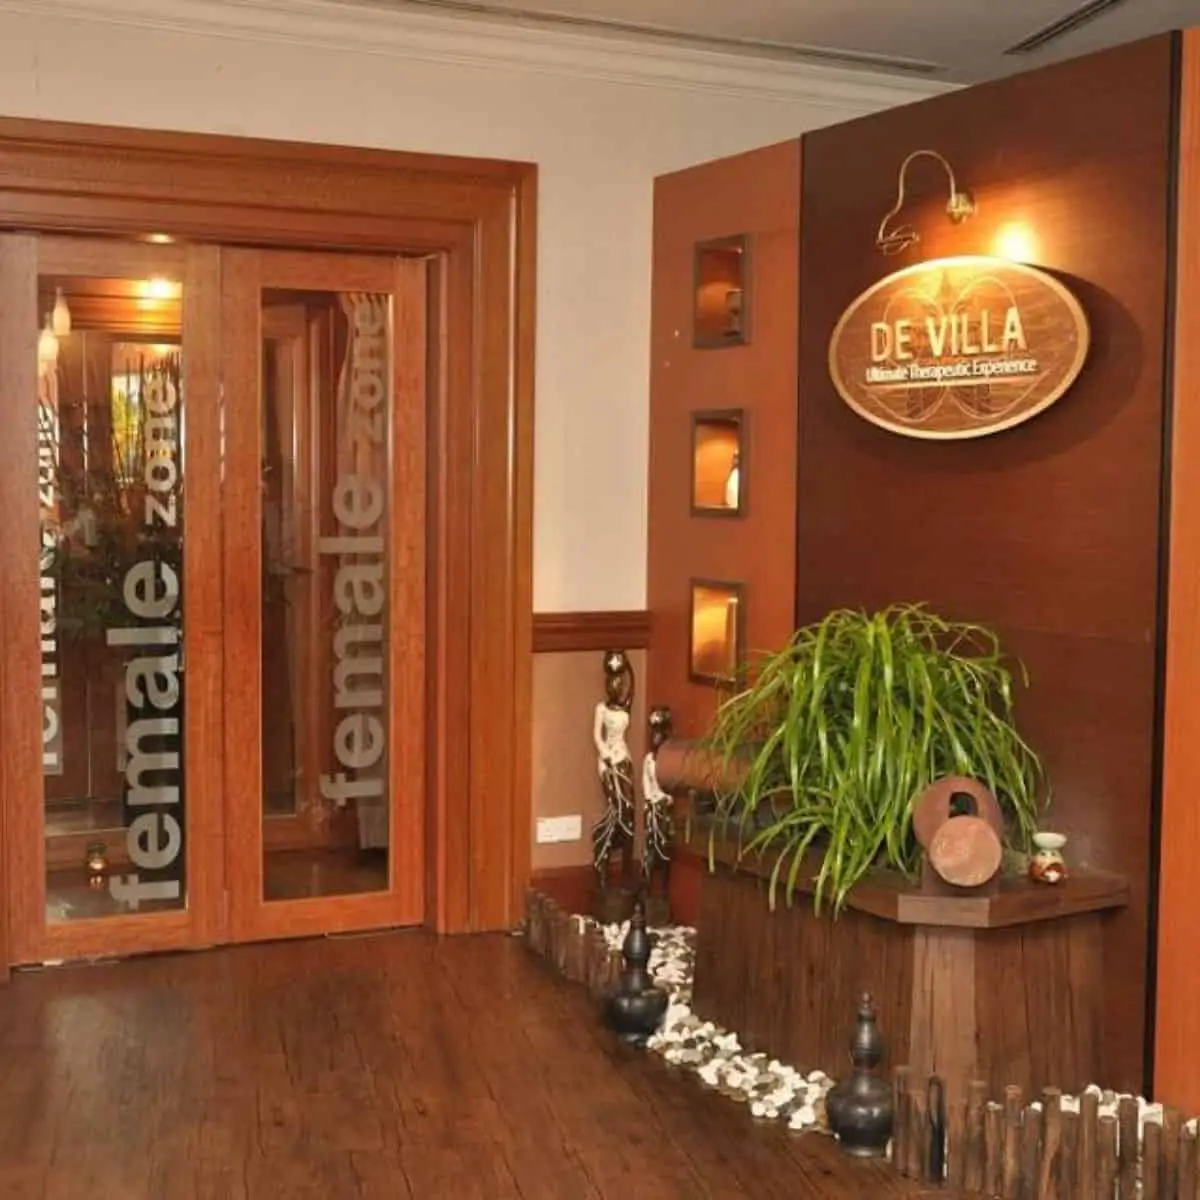 De Villa Penang Spa lounge area with a woody massage treatment interior